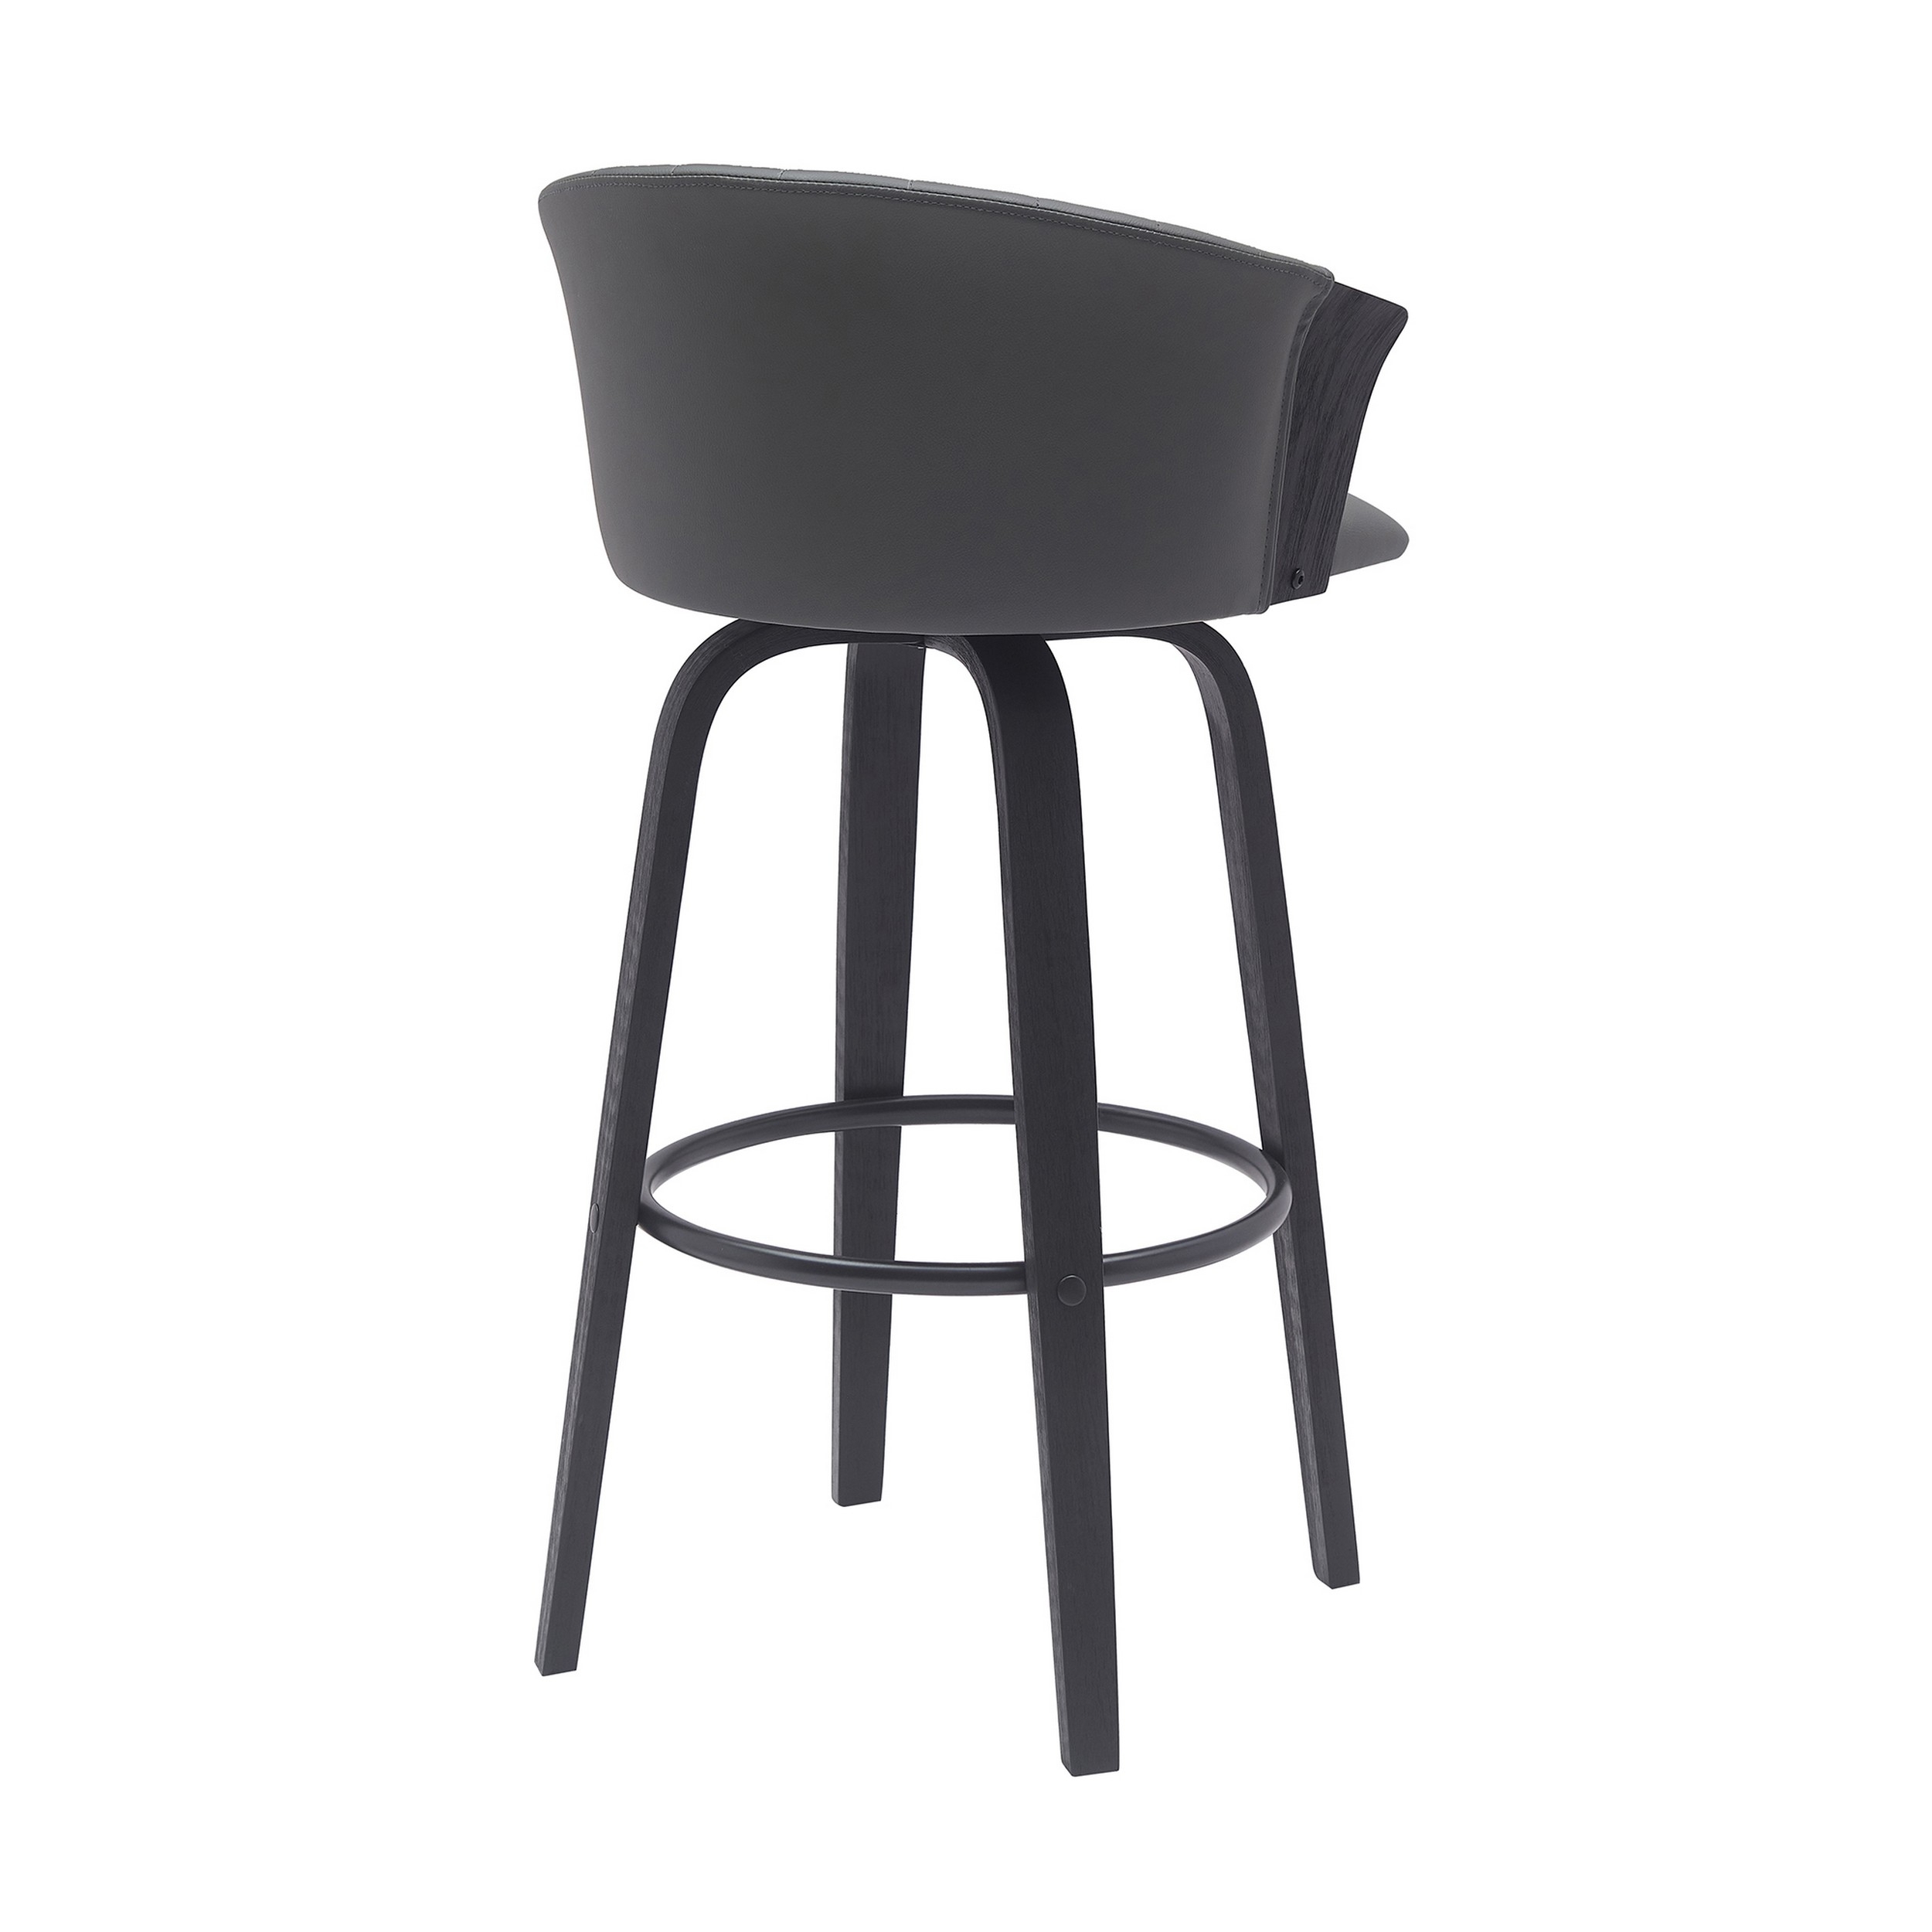 Oja 30 Inch Swivel Barstool Chair, Faux Leather, Curved Back, Black Wood - Saltoro Sherpi